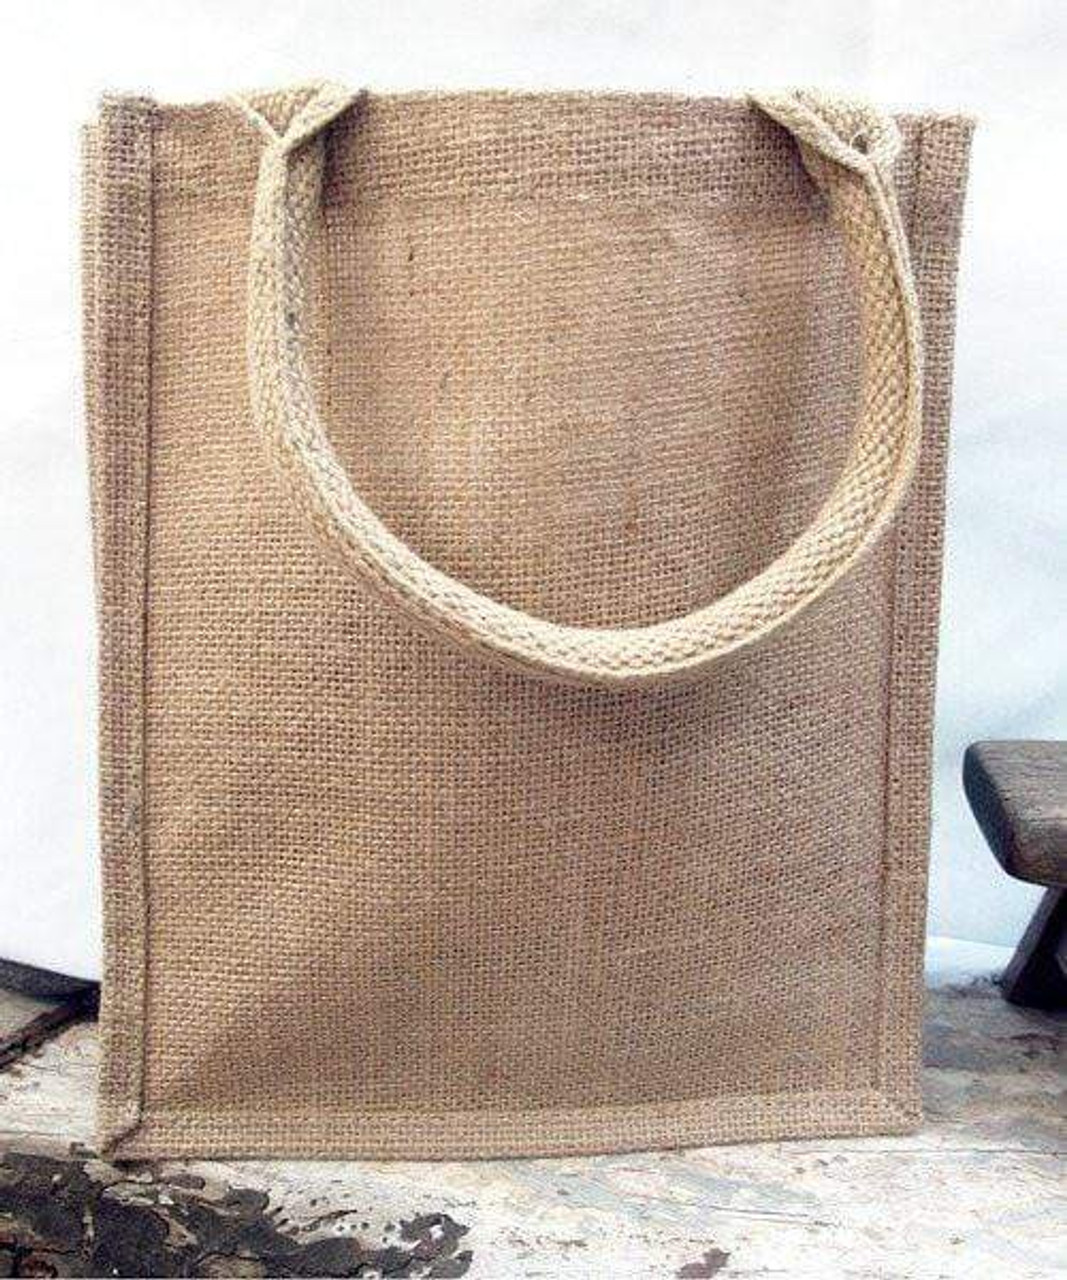 4 x 6 Small Burlap Bags With Drawstring - 100% Natural Jute